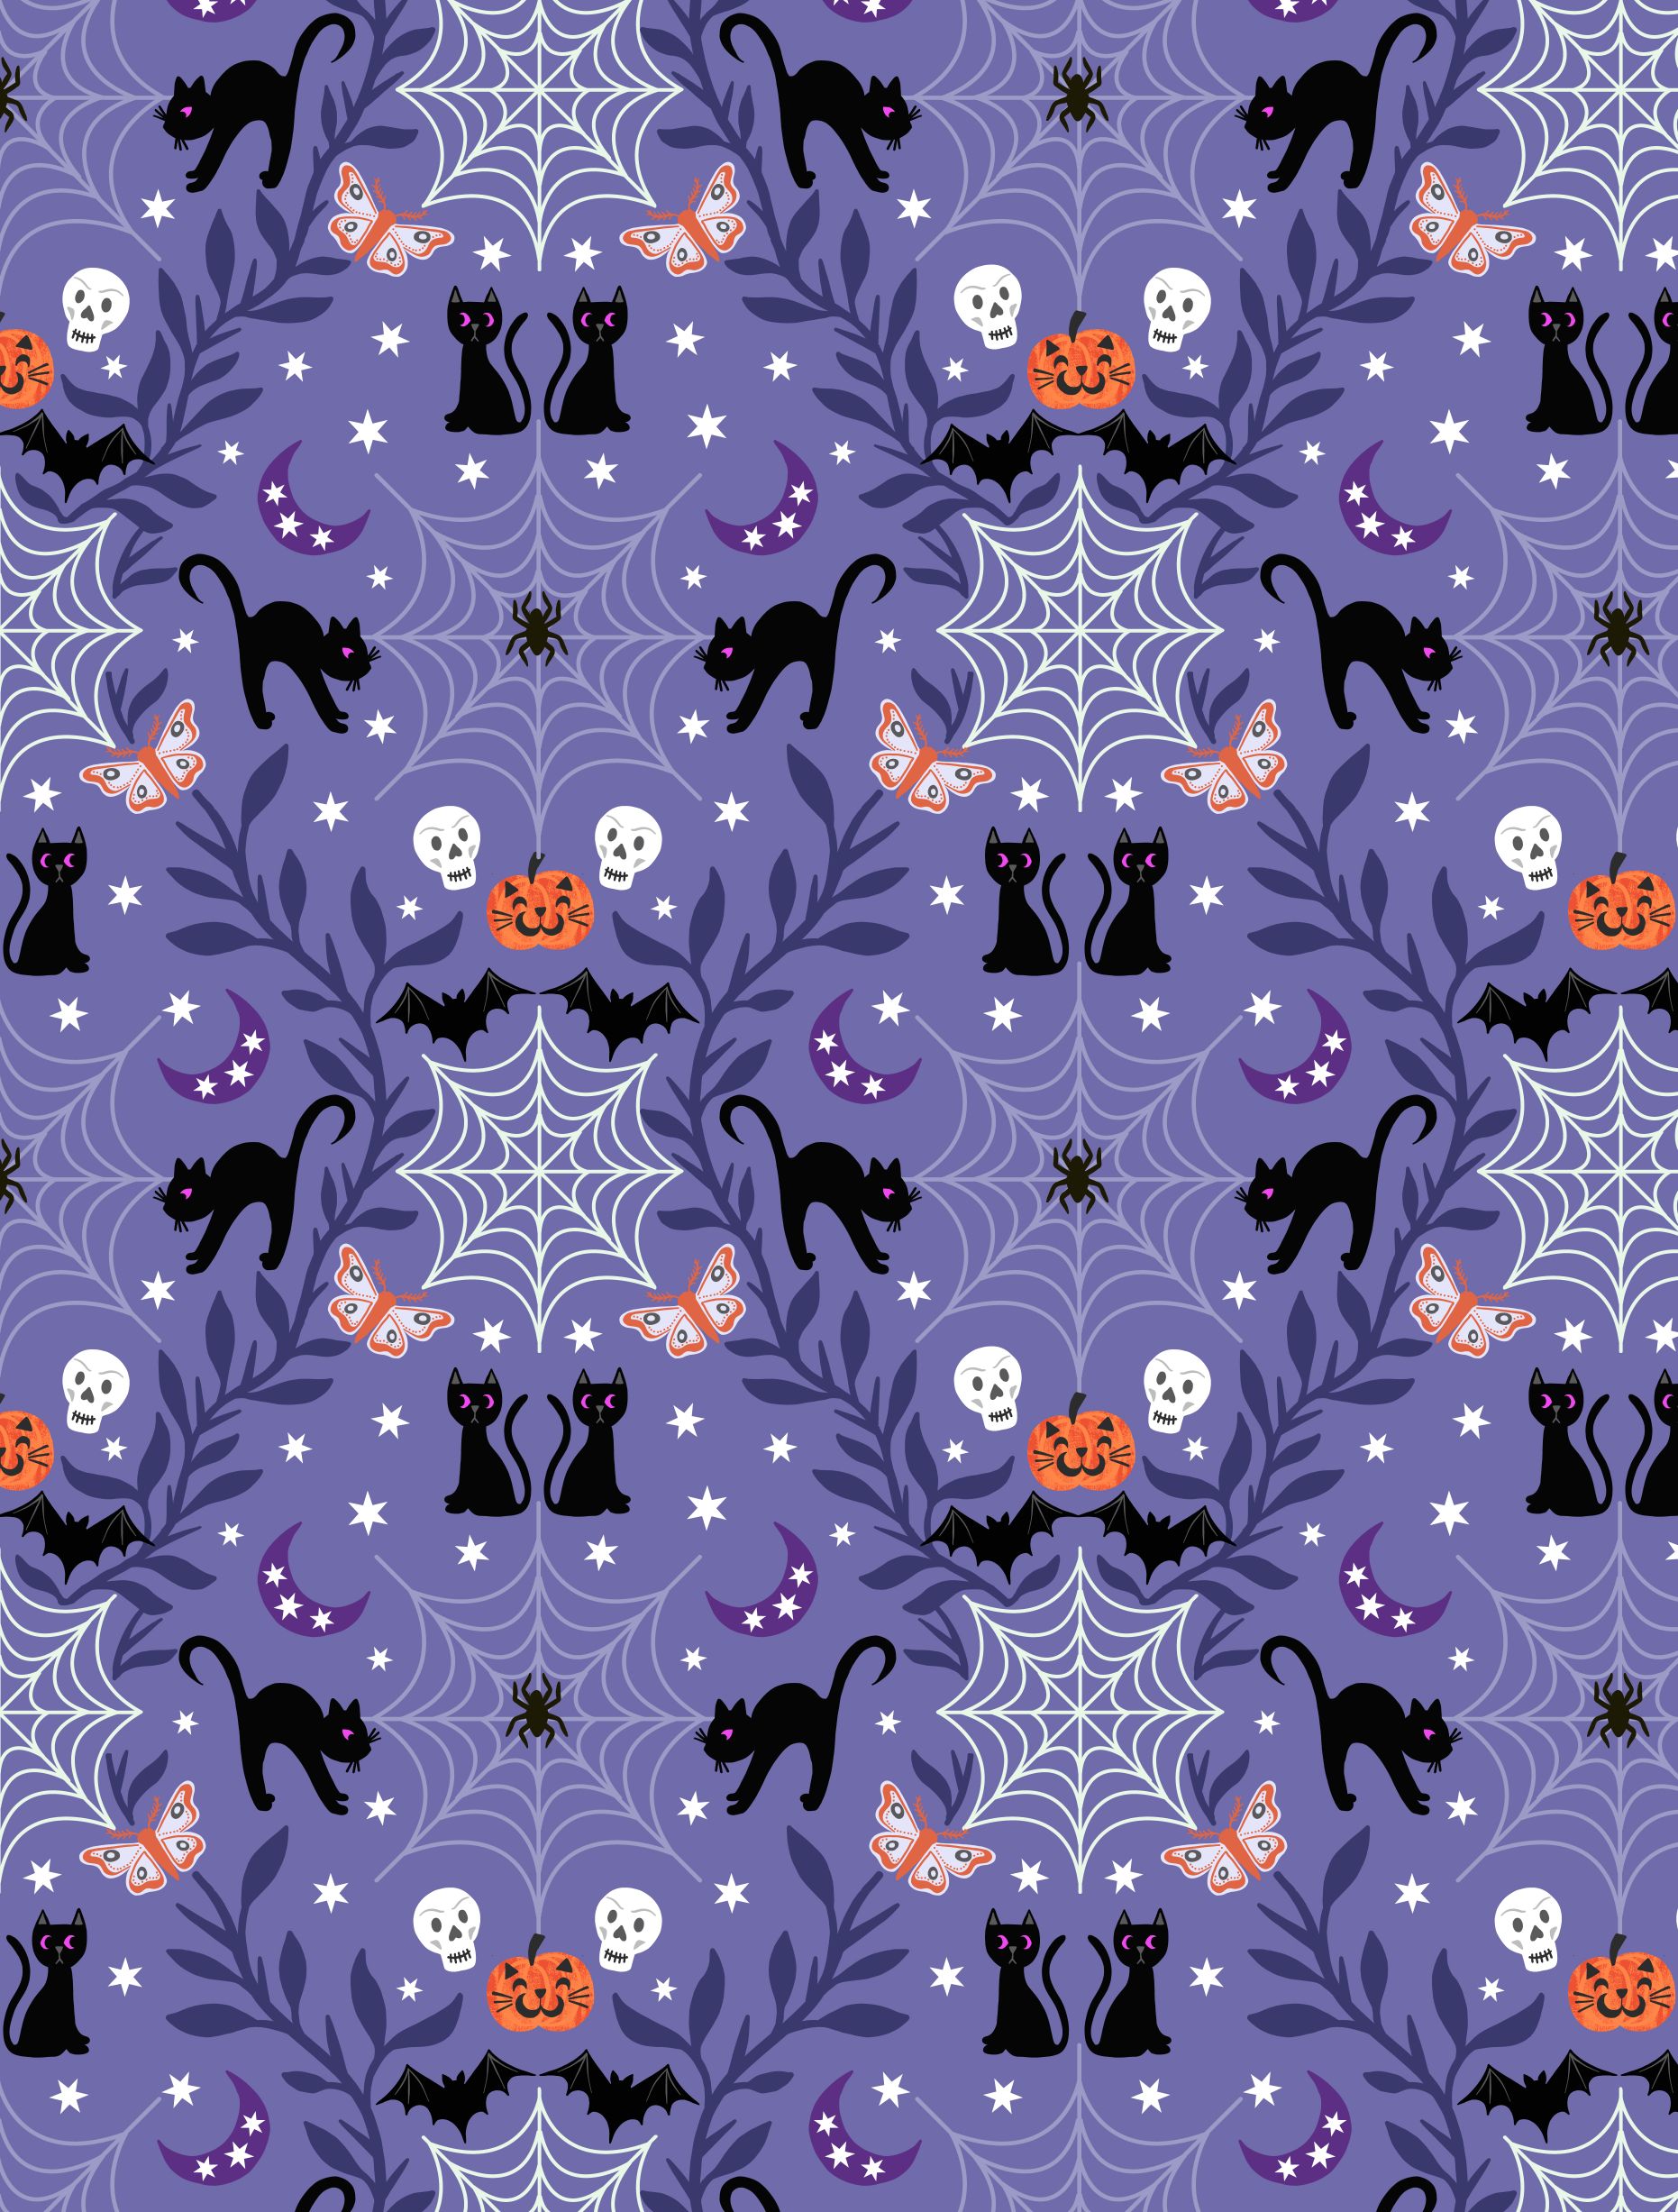 Lewis & Irene - Castle Spooky - A576.2 - Cobwebs & Cats on Purple Blue Fabric